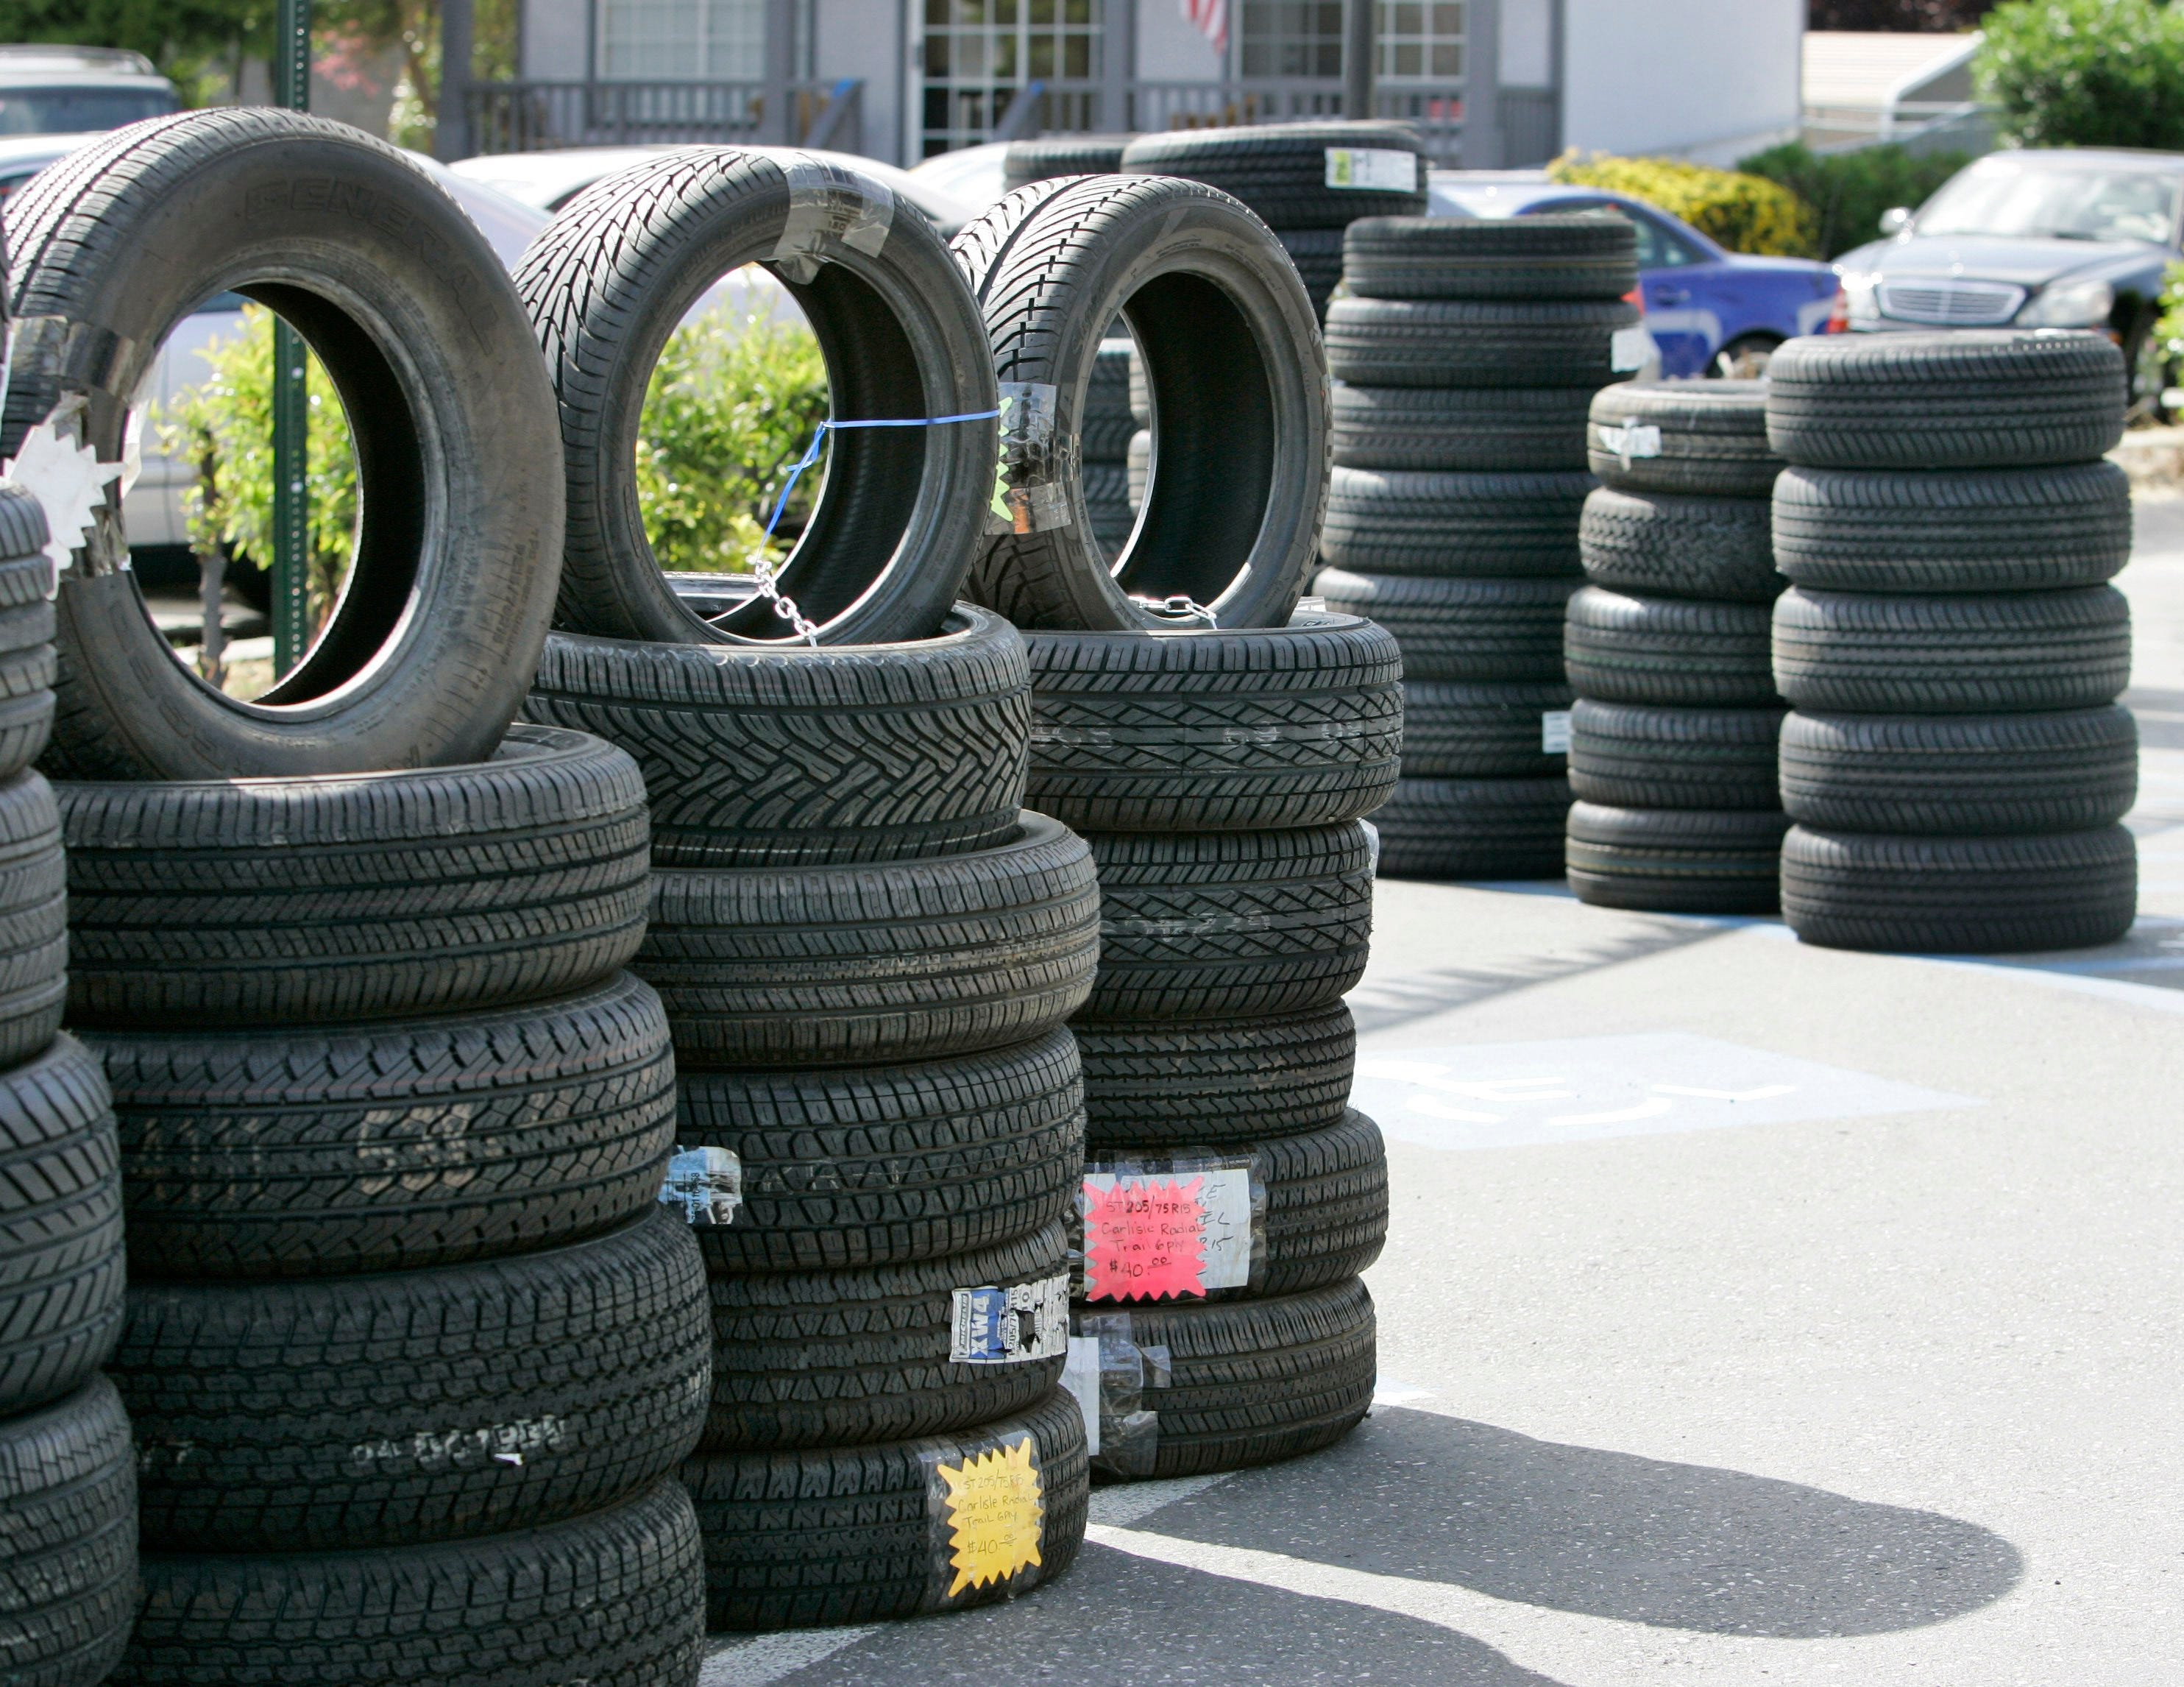 Goodyear recalls SUV tires due to tread cracks